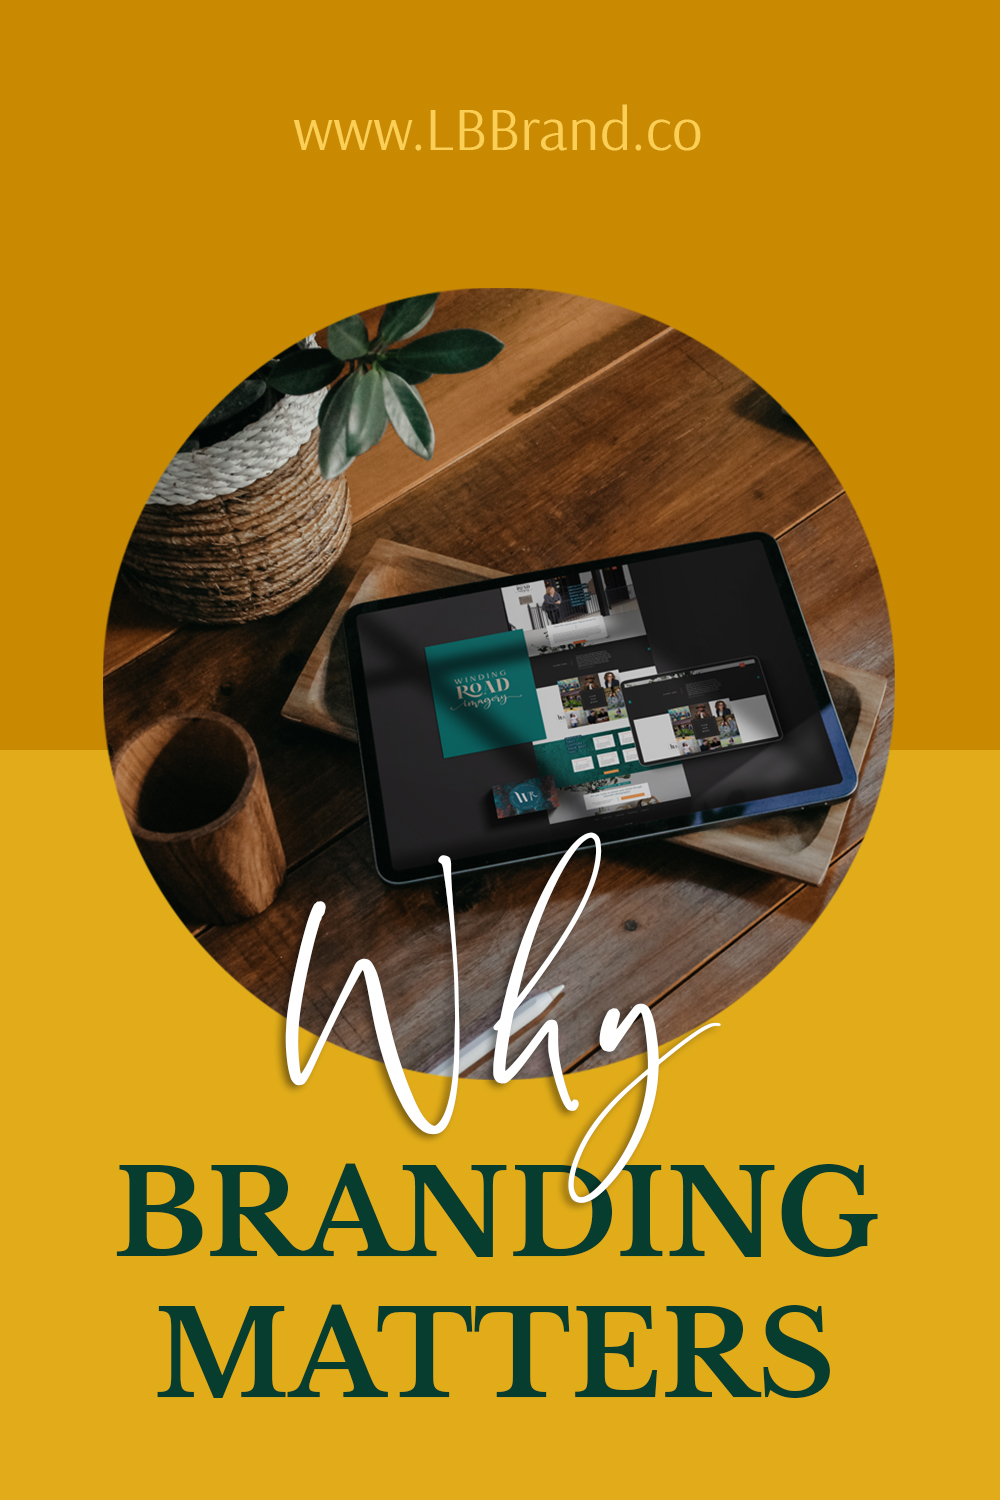 Why branding matters